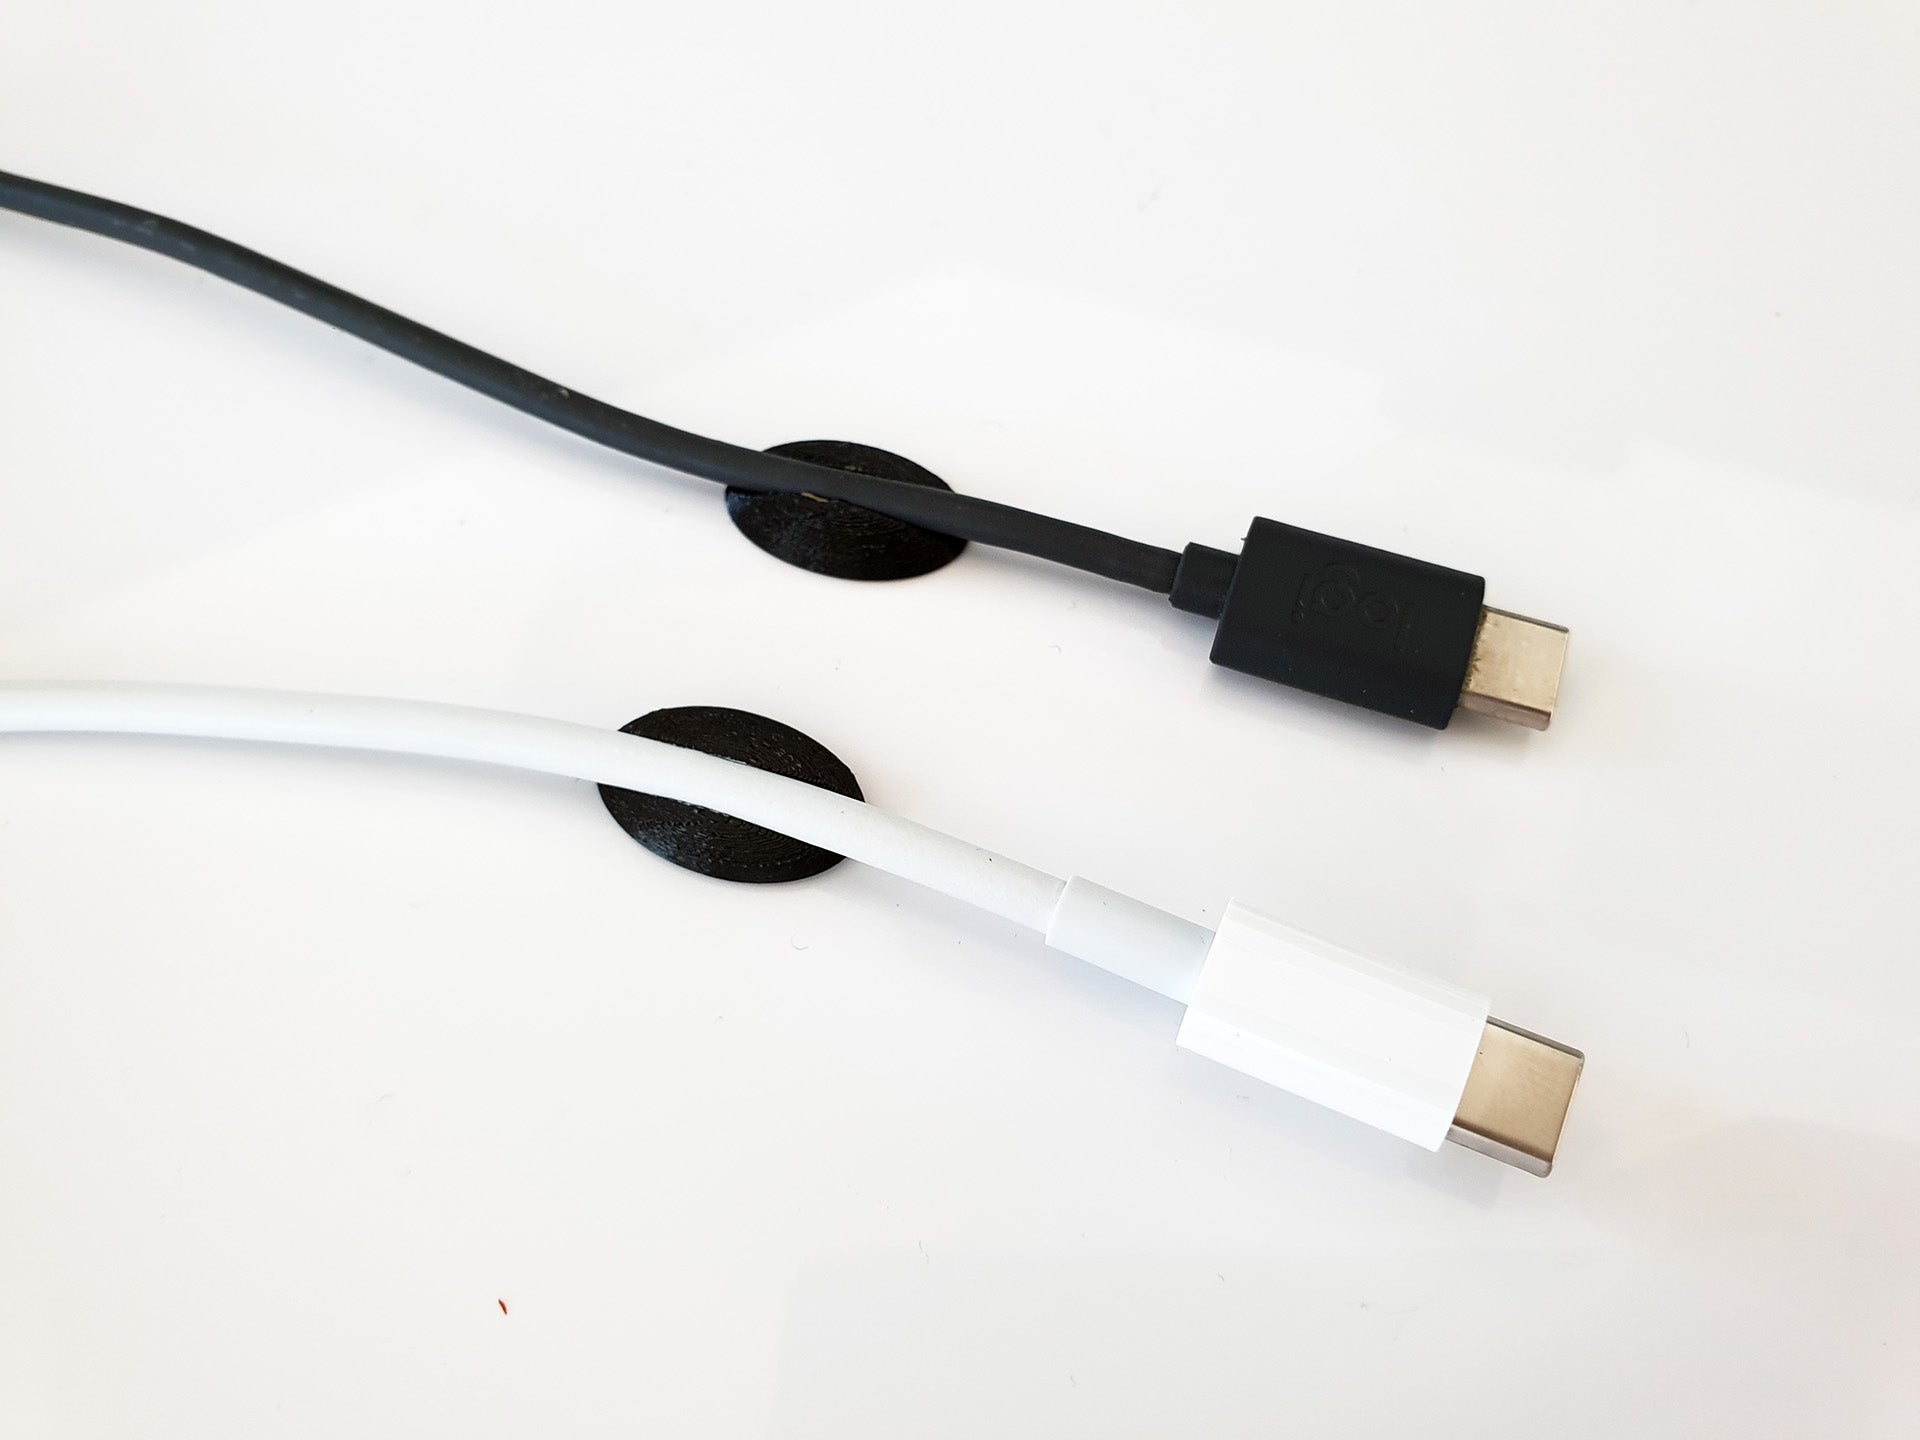 Biurkowy uchwyt na kable Apple Macbook Pro i inne kable